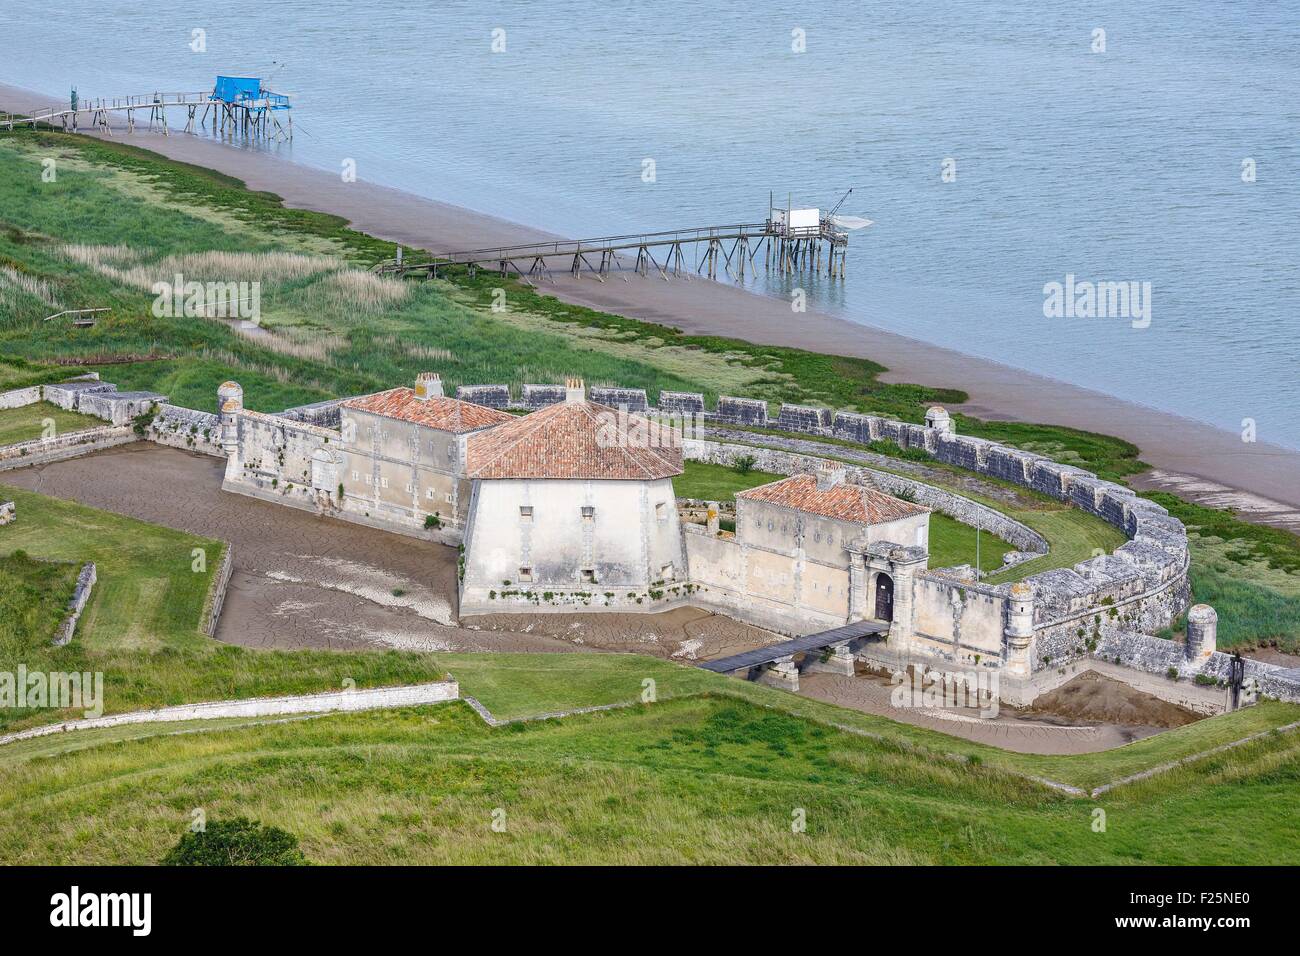 France, Charente Maritime, Saint Nazaire sur Charente, Lupin fort on La Charente river (aerial view) Stock Photo